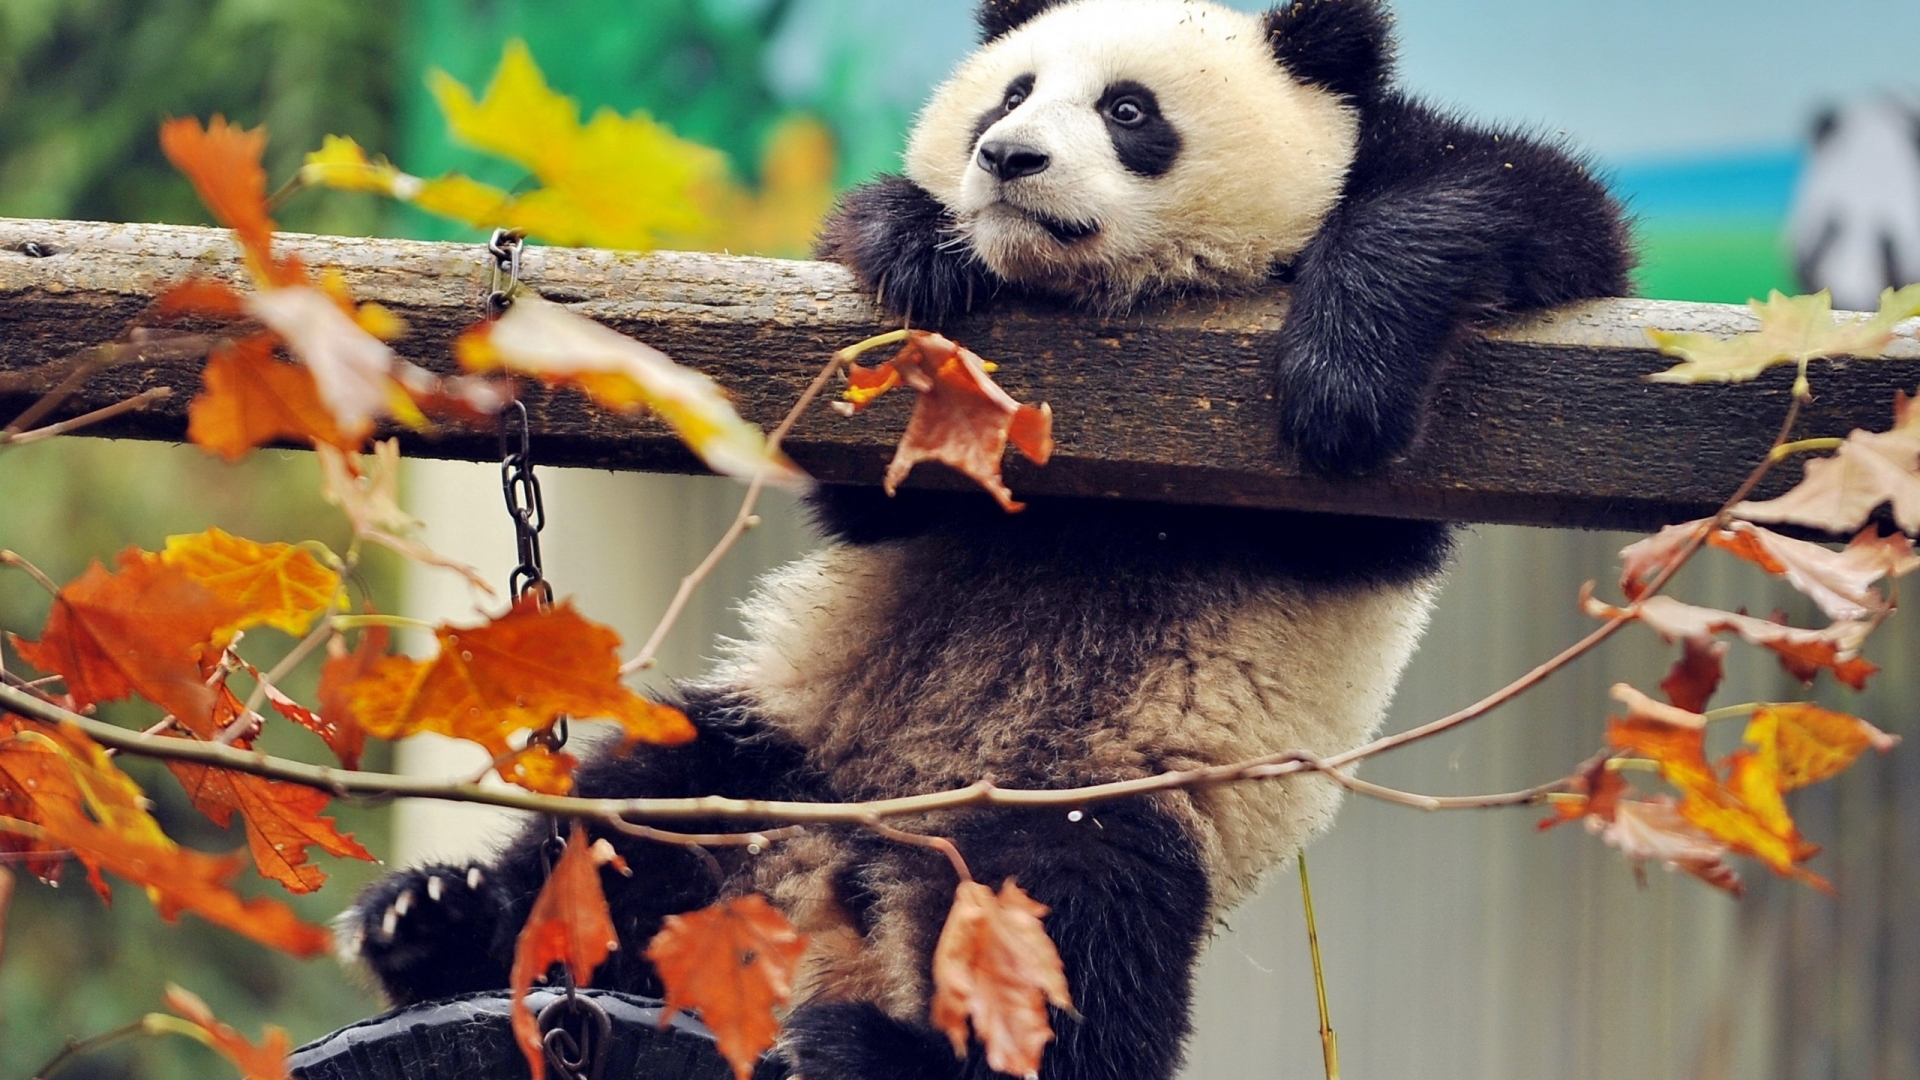 Cute Panda Climbing for 1920 x 1080 HDTV 1080p resolution